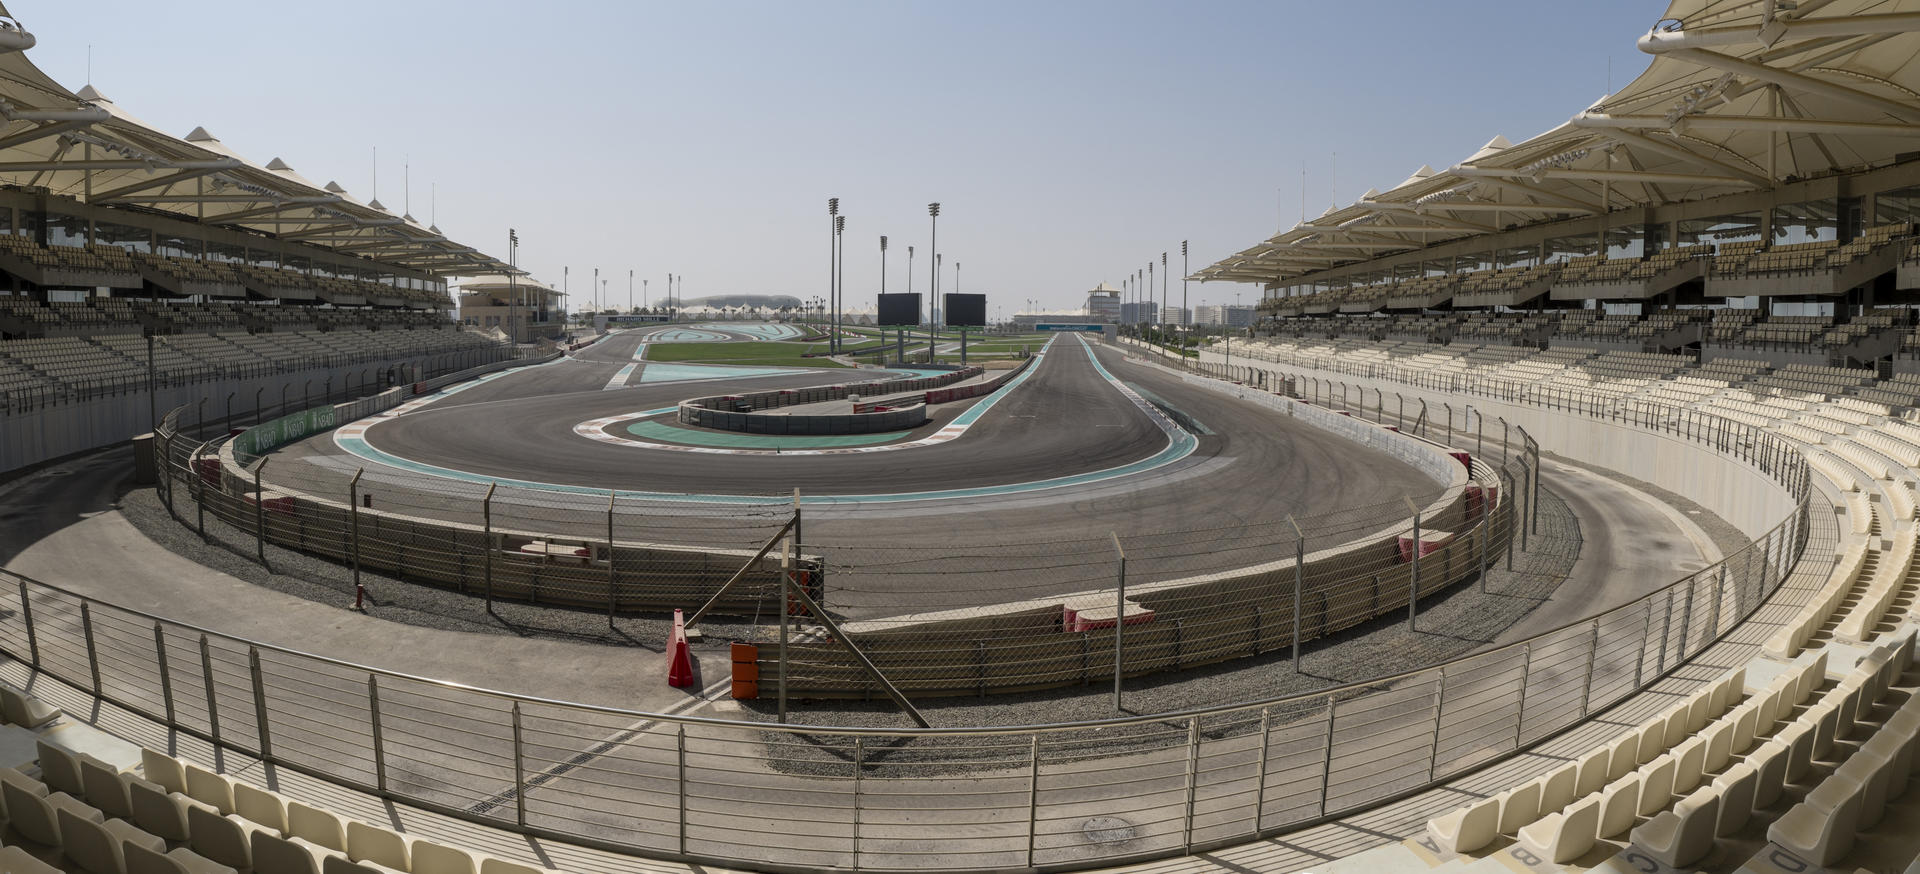 The Yas Marina Circuit, Abu Dhabi